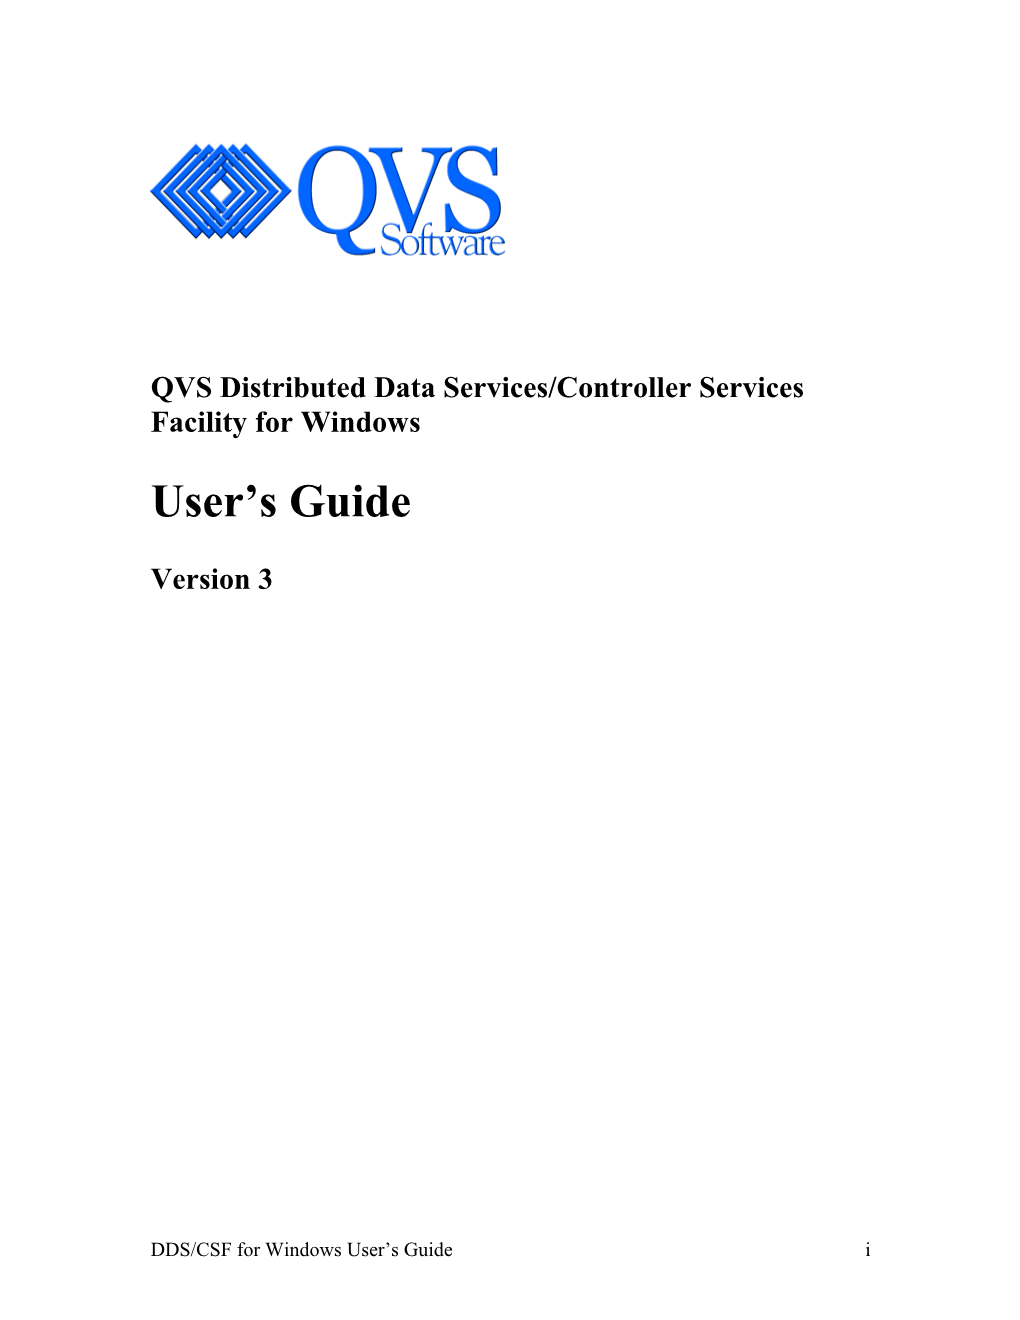 DDS/CSF for Windows User's Guide